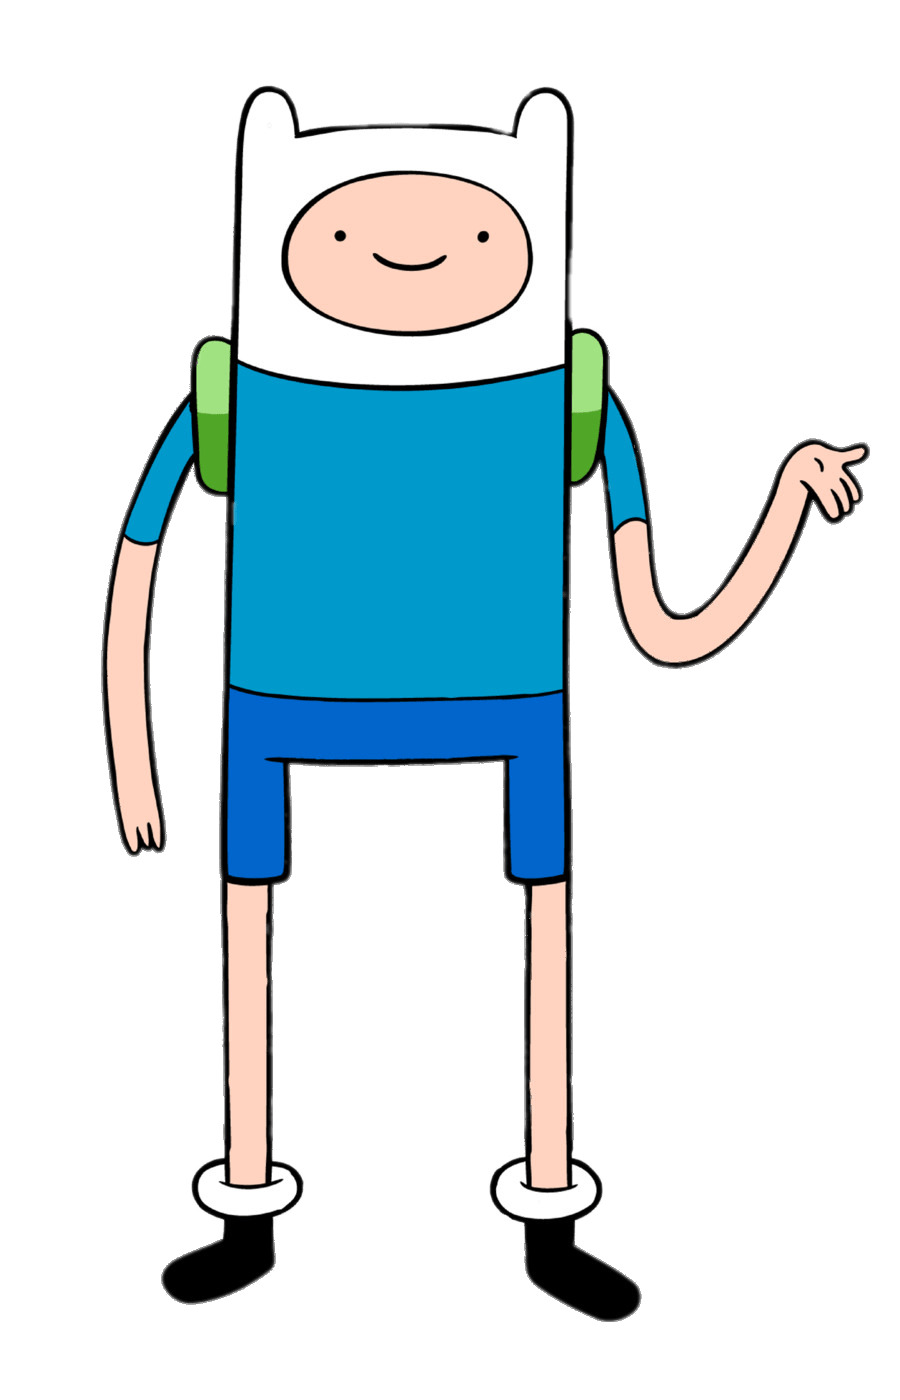 Adventure Time Finn the Human icons